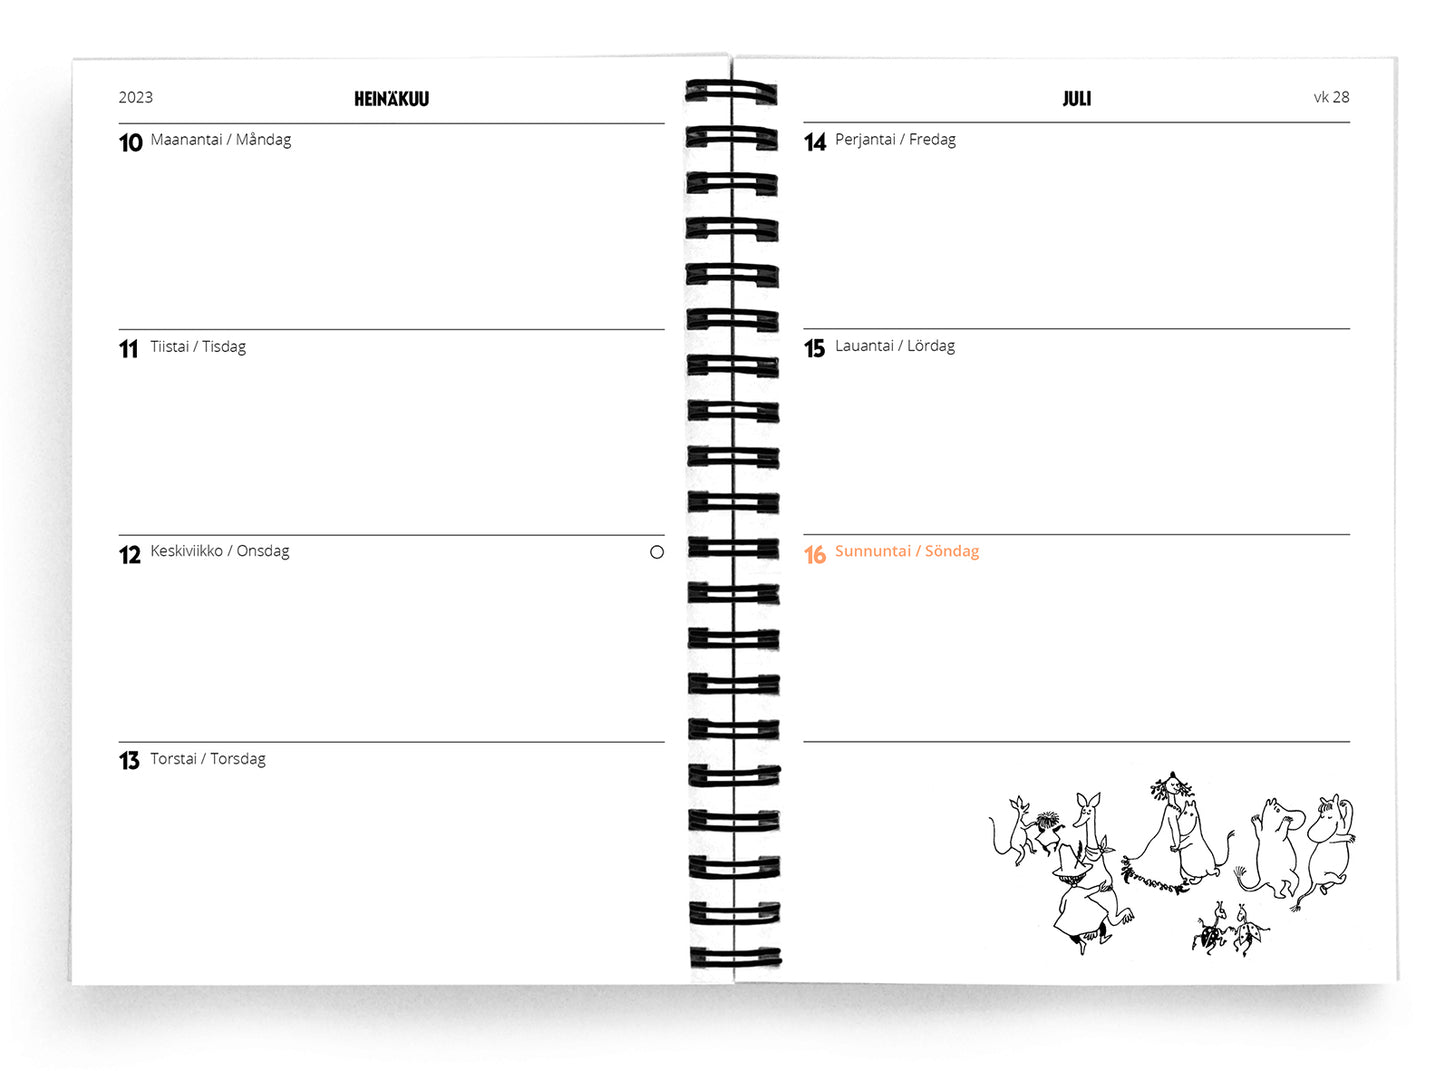 Academic year calendar Moomin 2023-2024